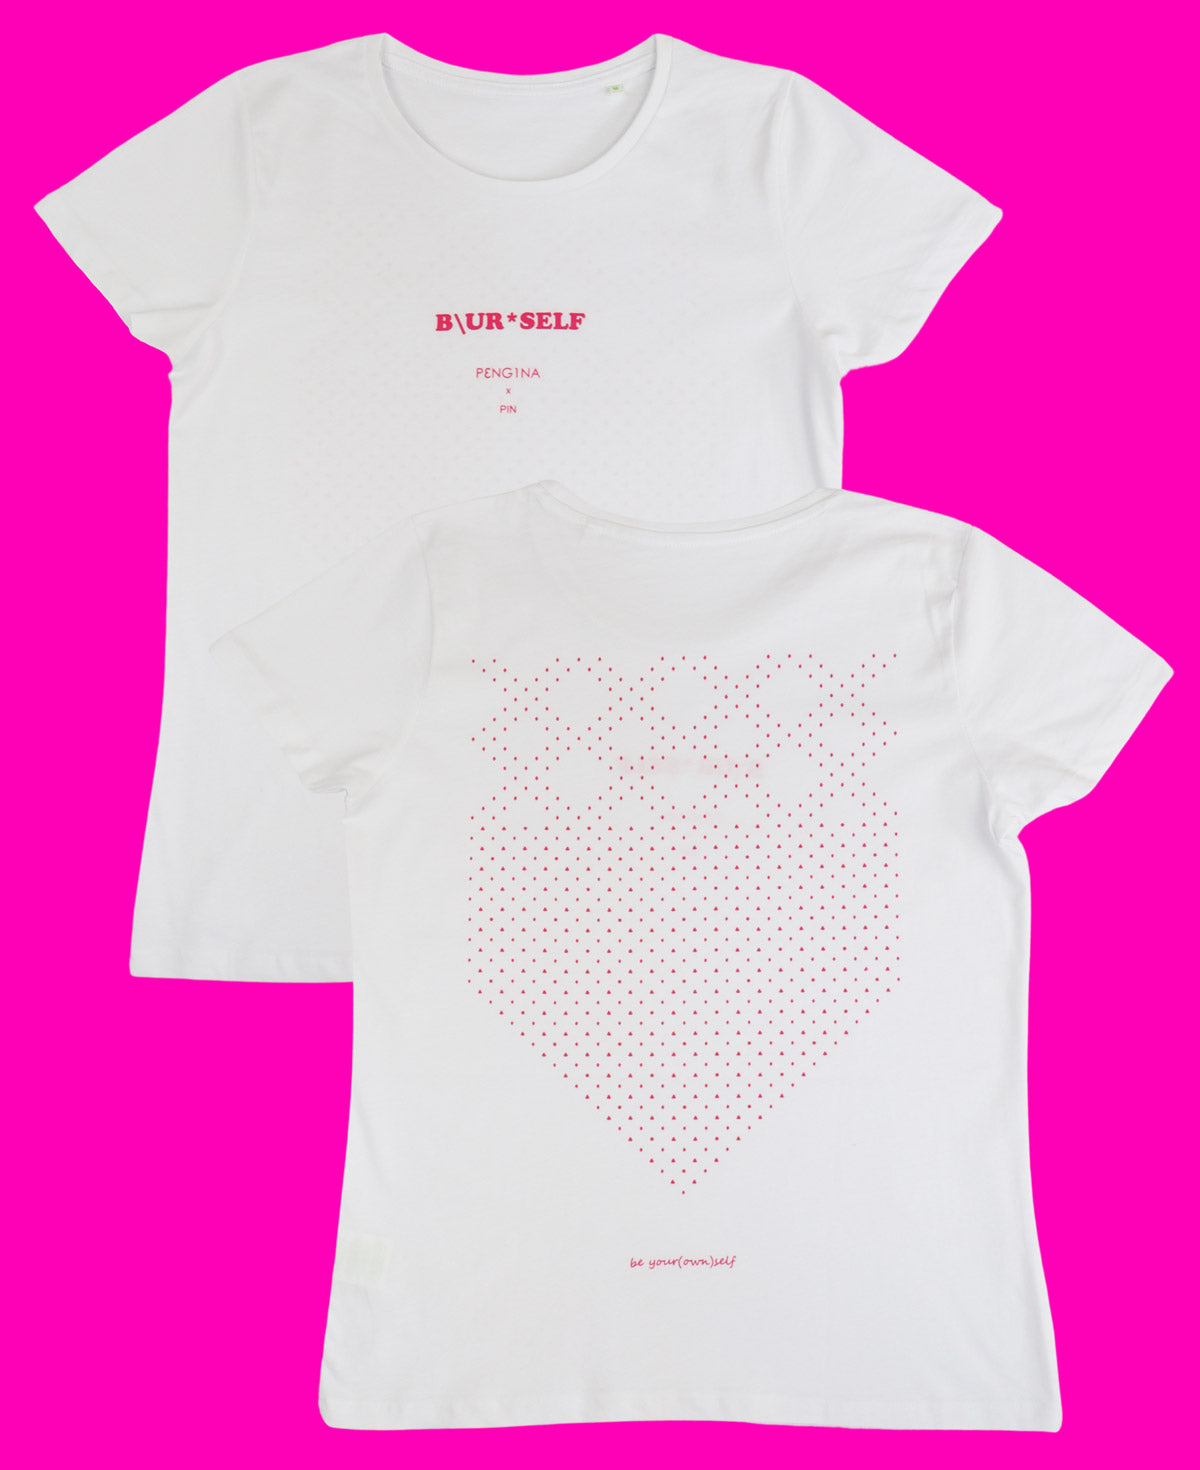 T-shirt beyourself by PENGINA XY F Pink Glo